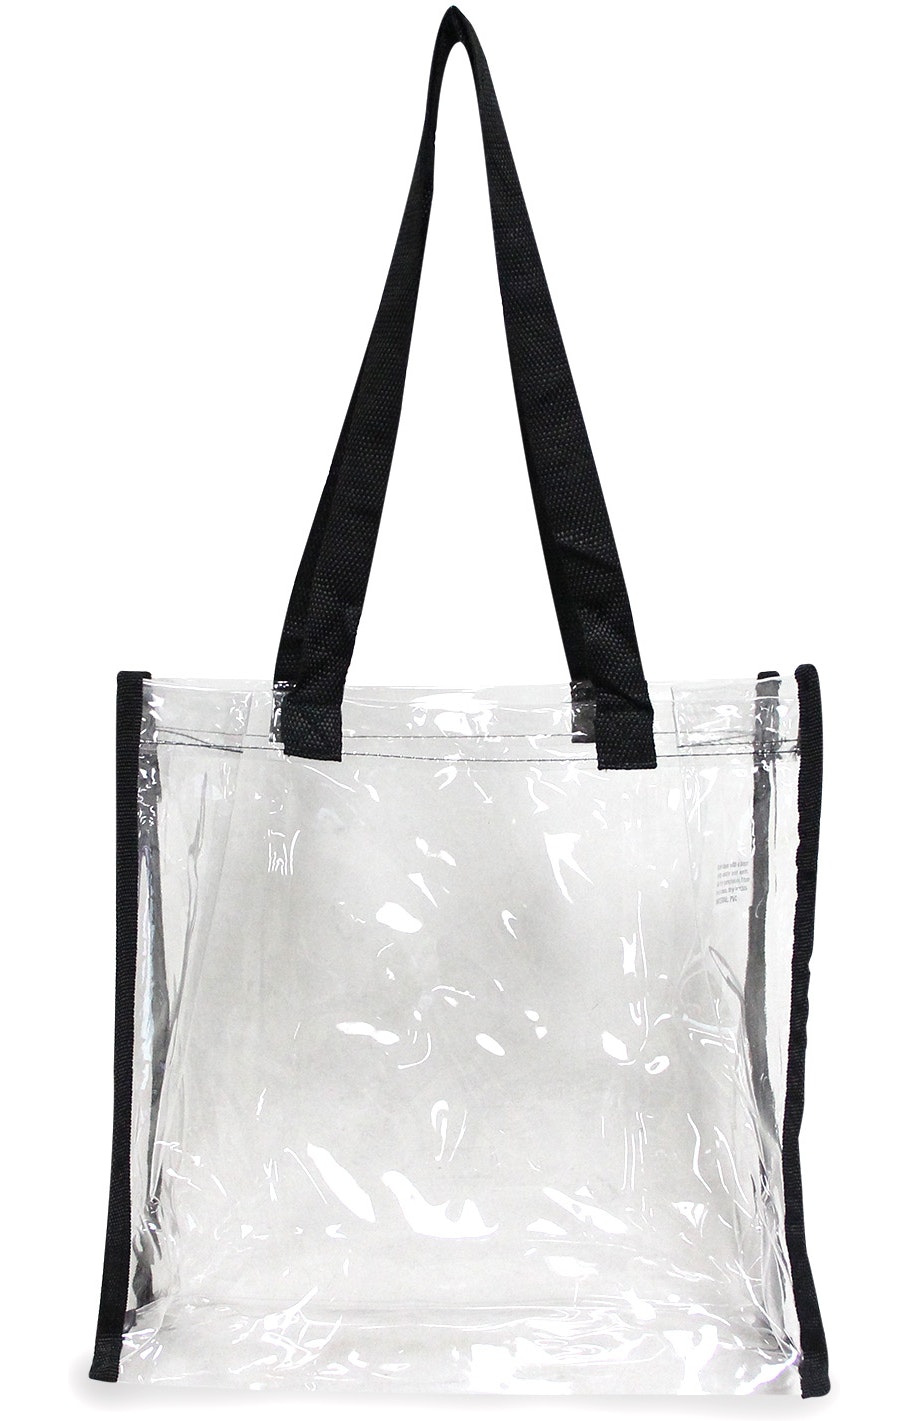 OAD OAD5004 Clear Tote Bag | JiffyShirts